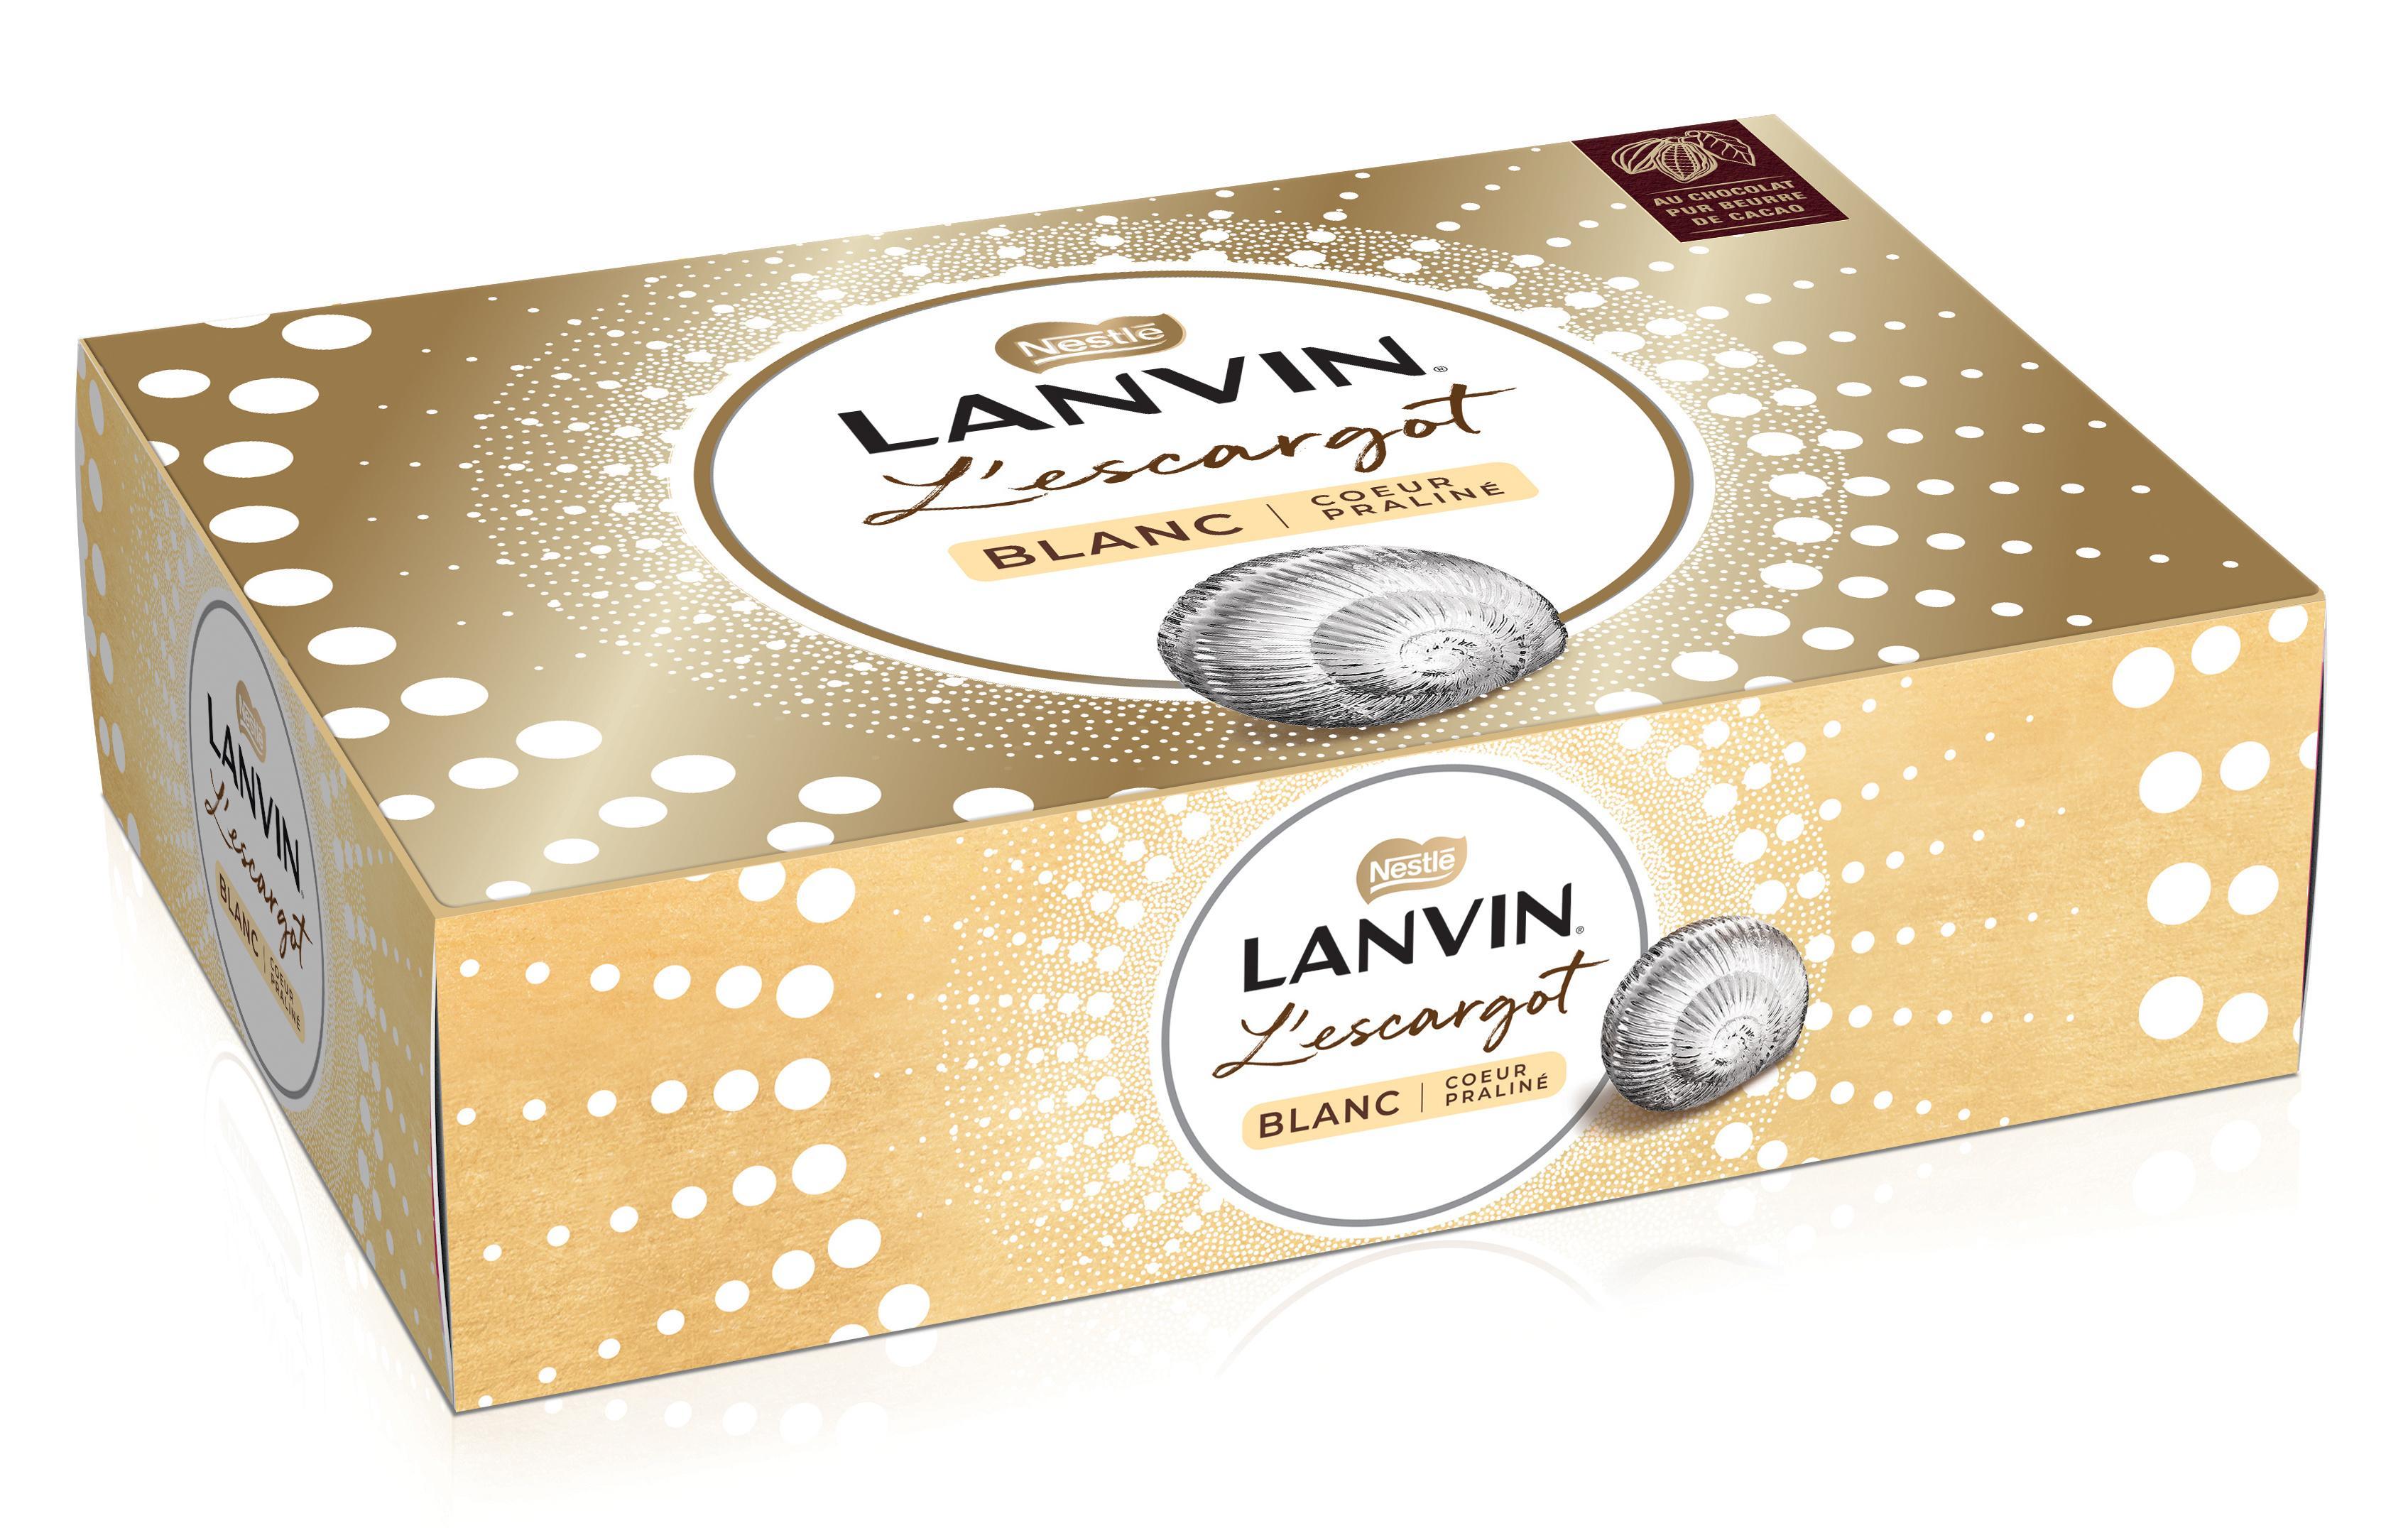 Nestlé - LANVIN Escargots Chocolat Blanc 360g